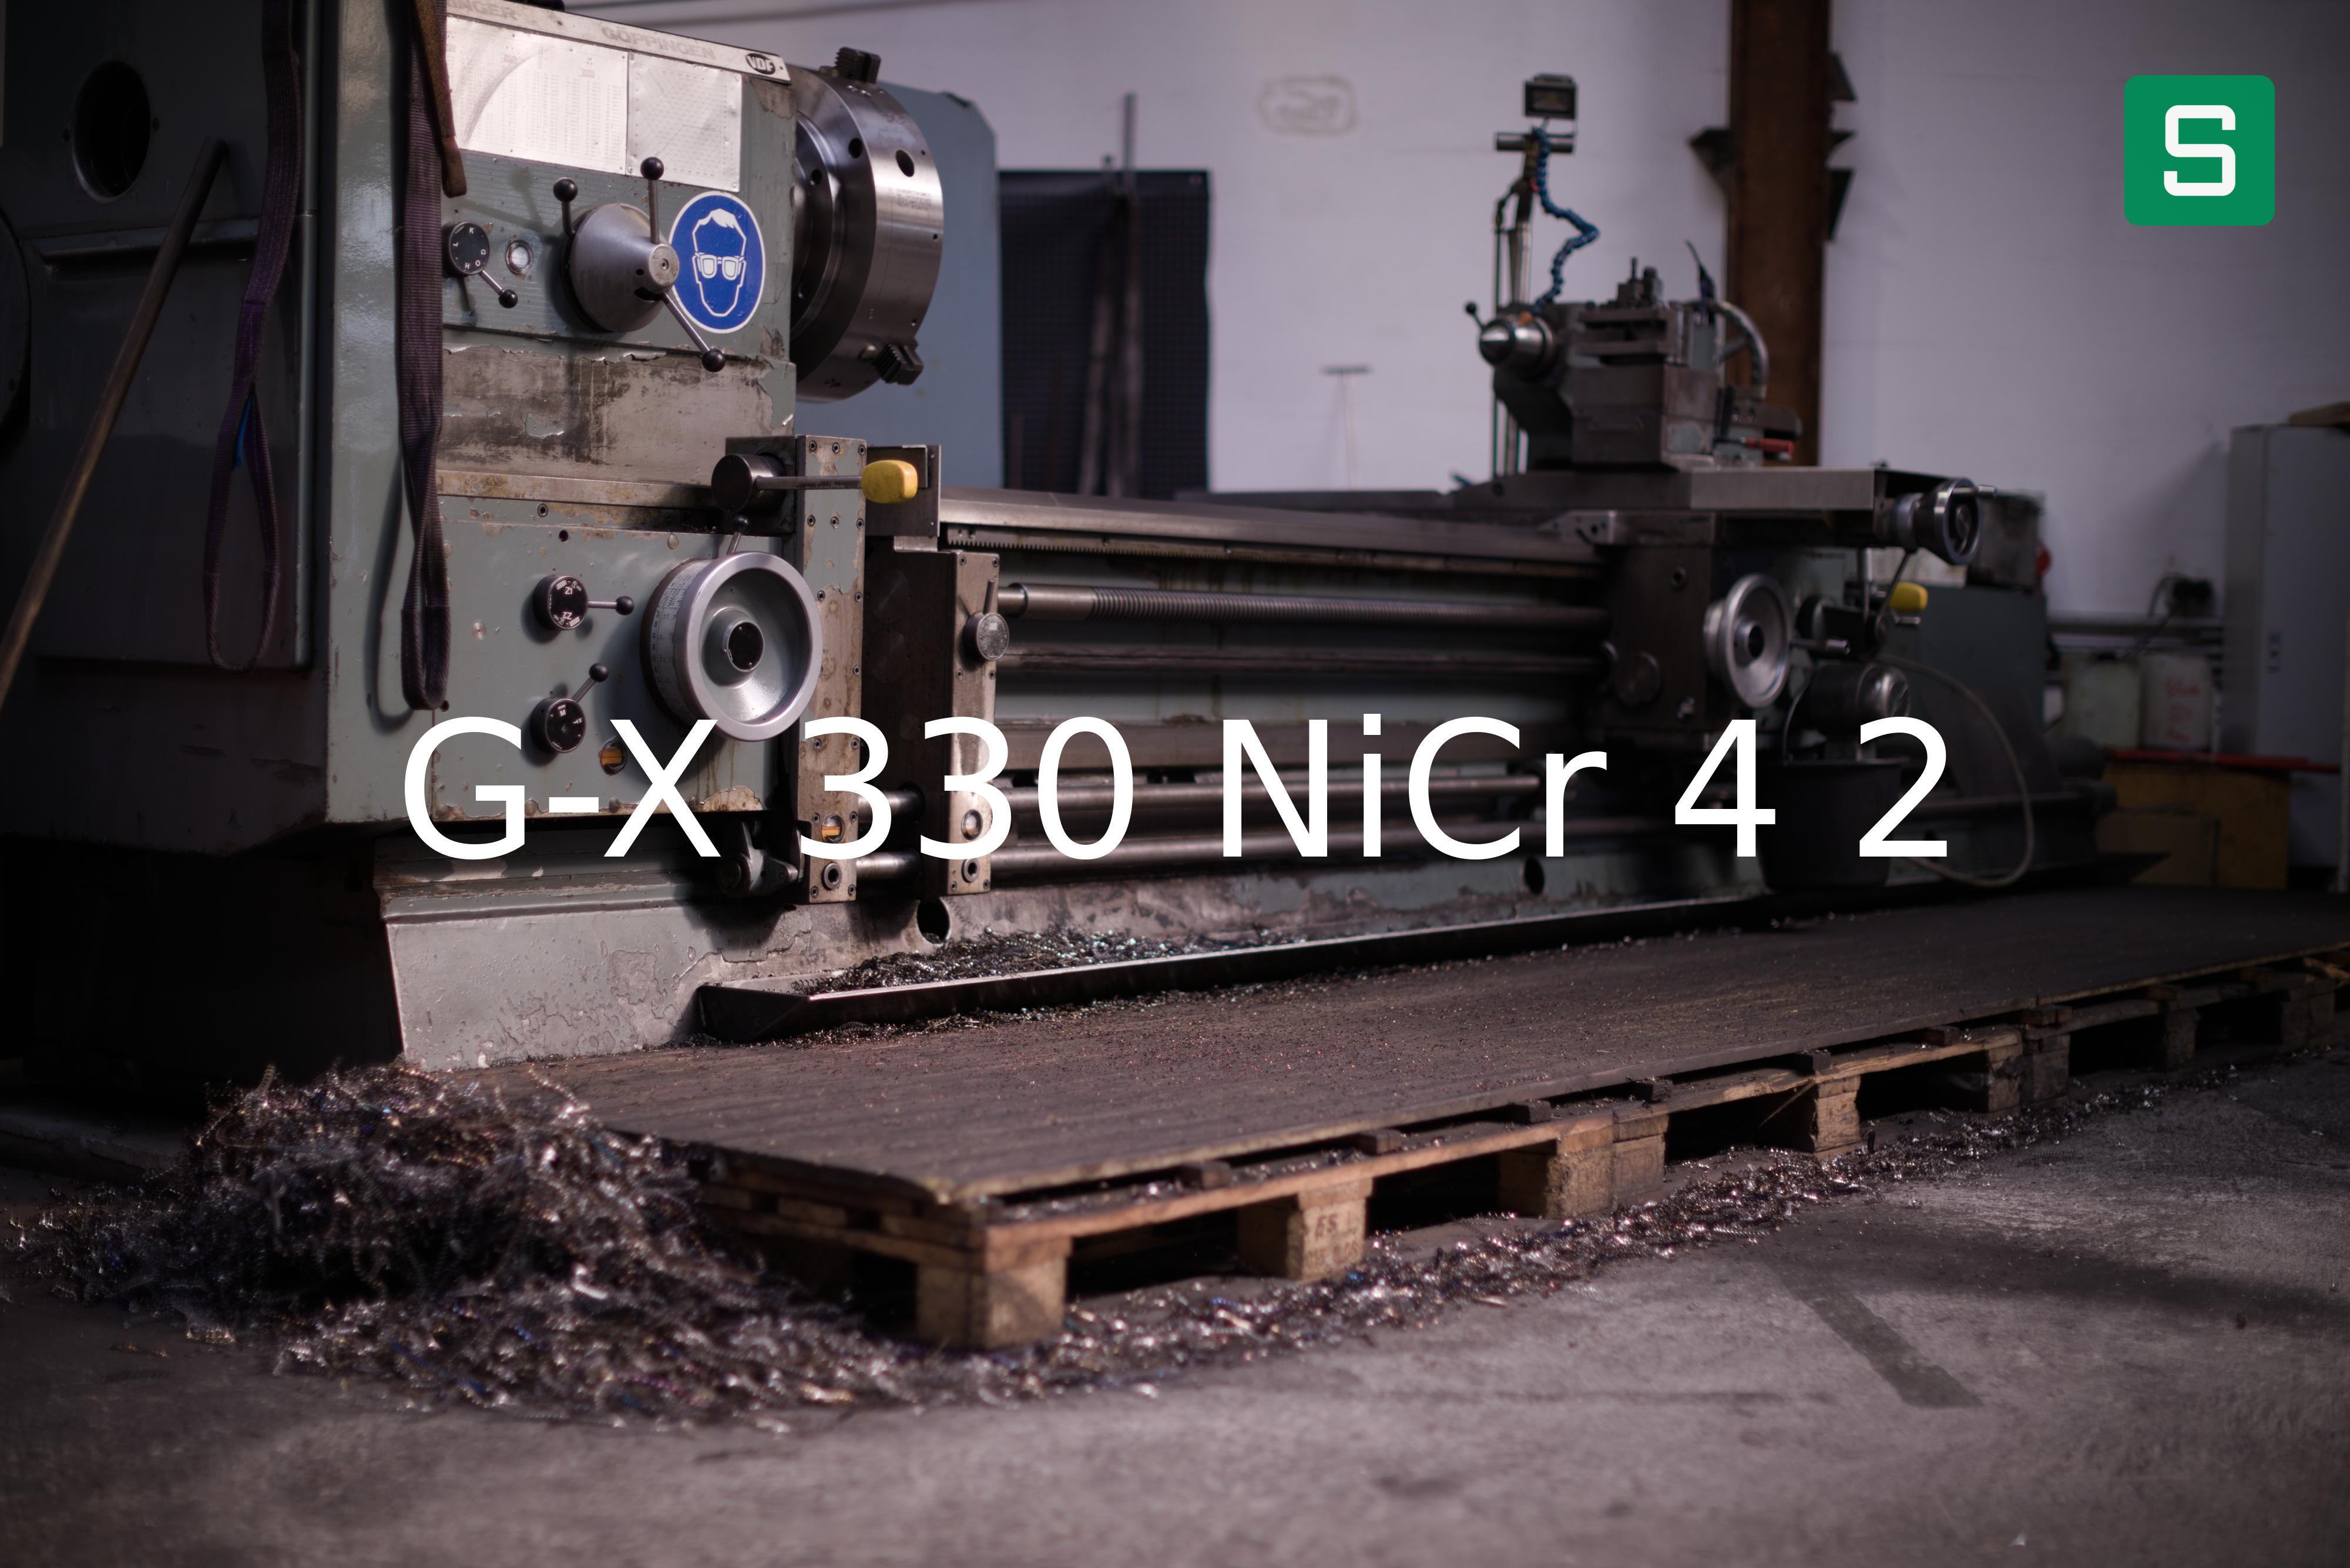 Steel Material: G-X 330 NiCr 4 2